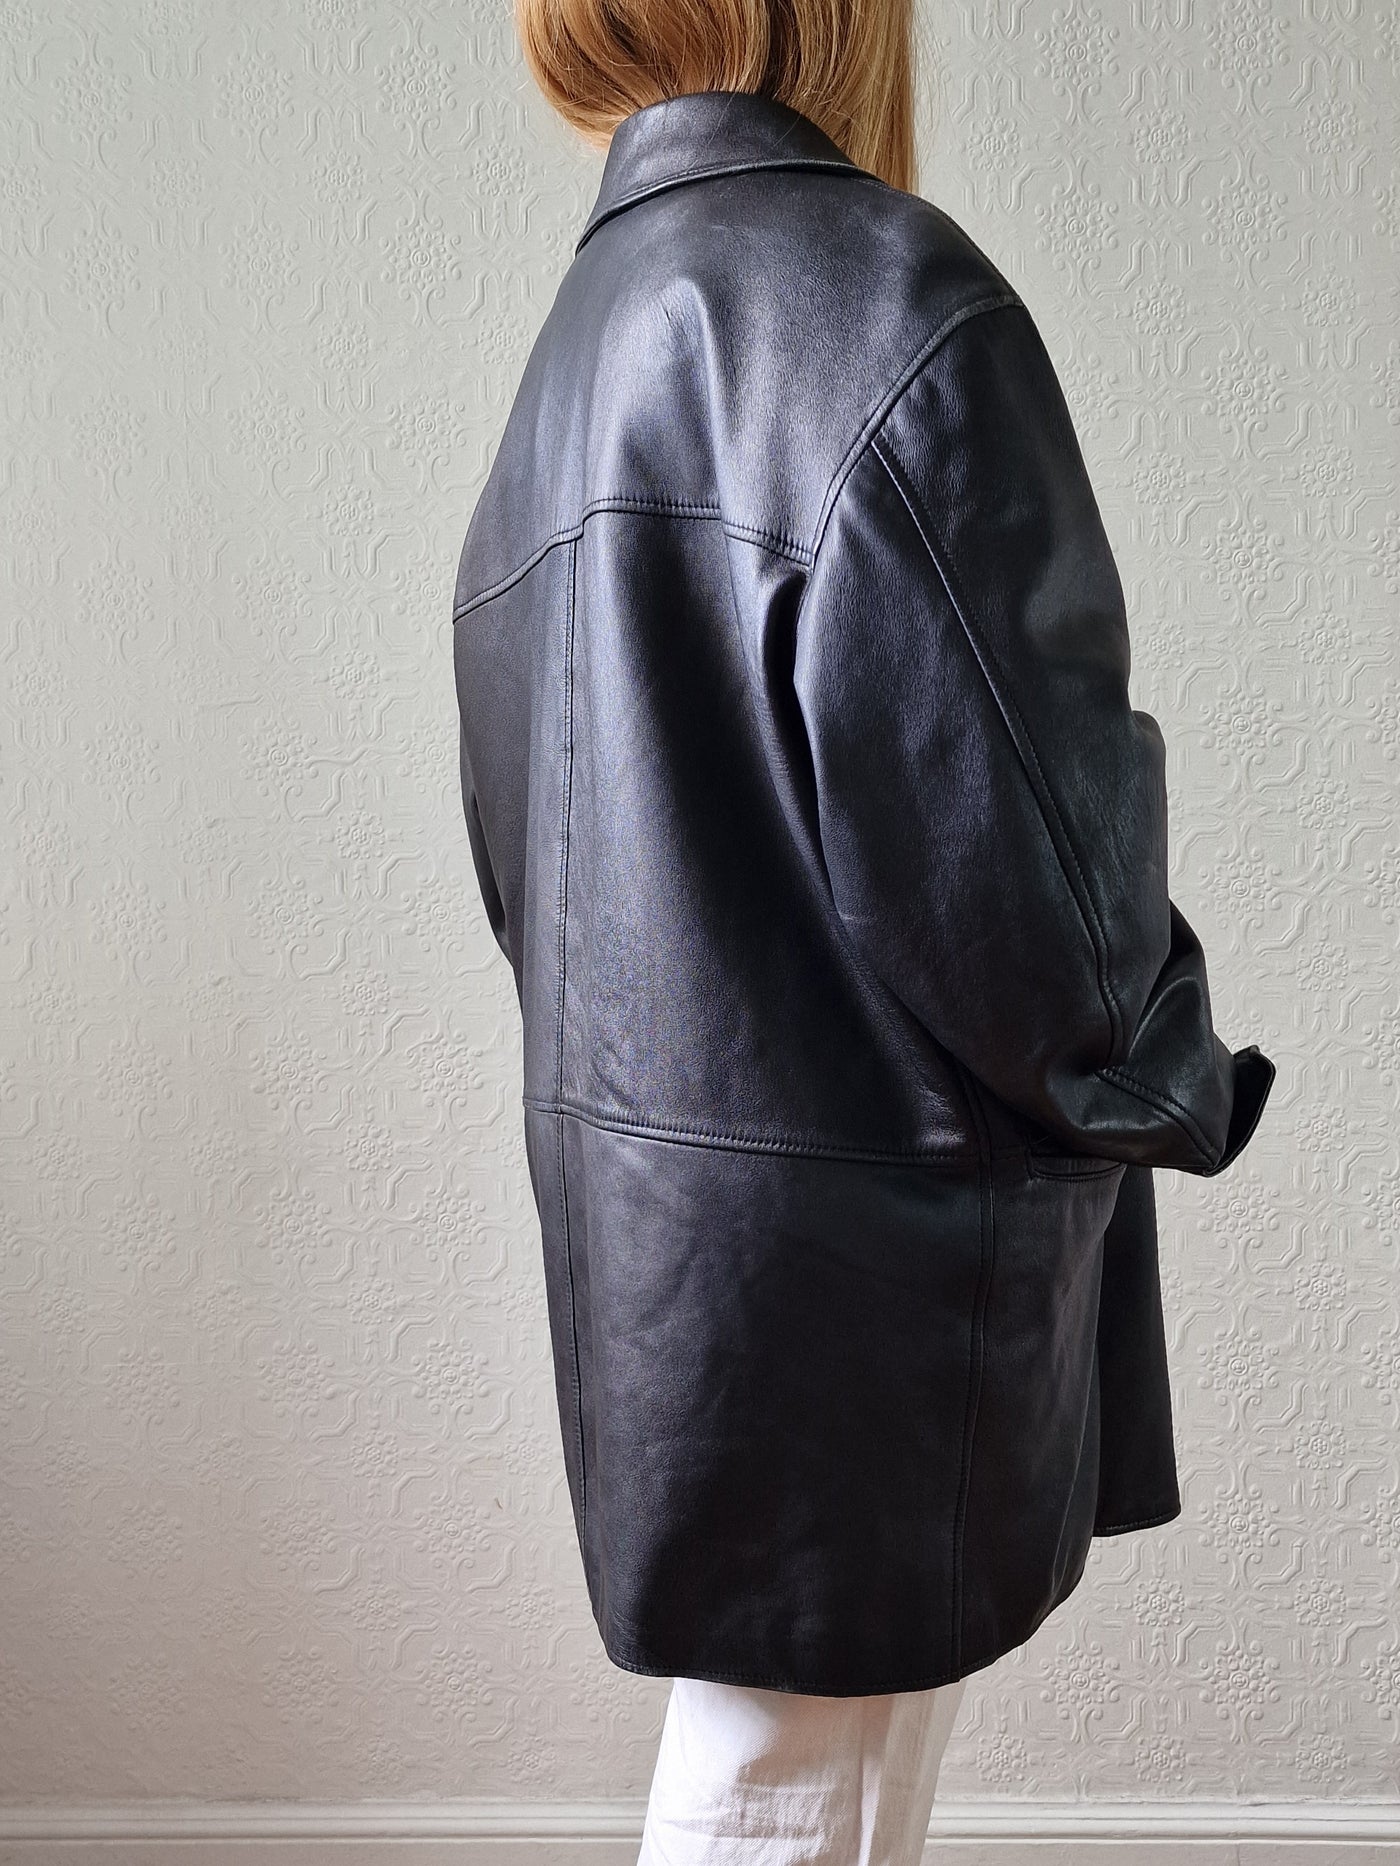 Vintage Black 100% Genuine Leather Jacket with Removable Lining - L